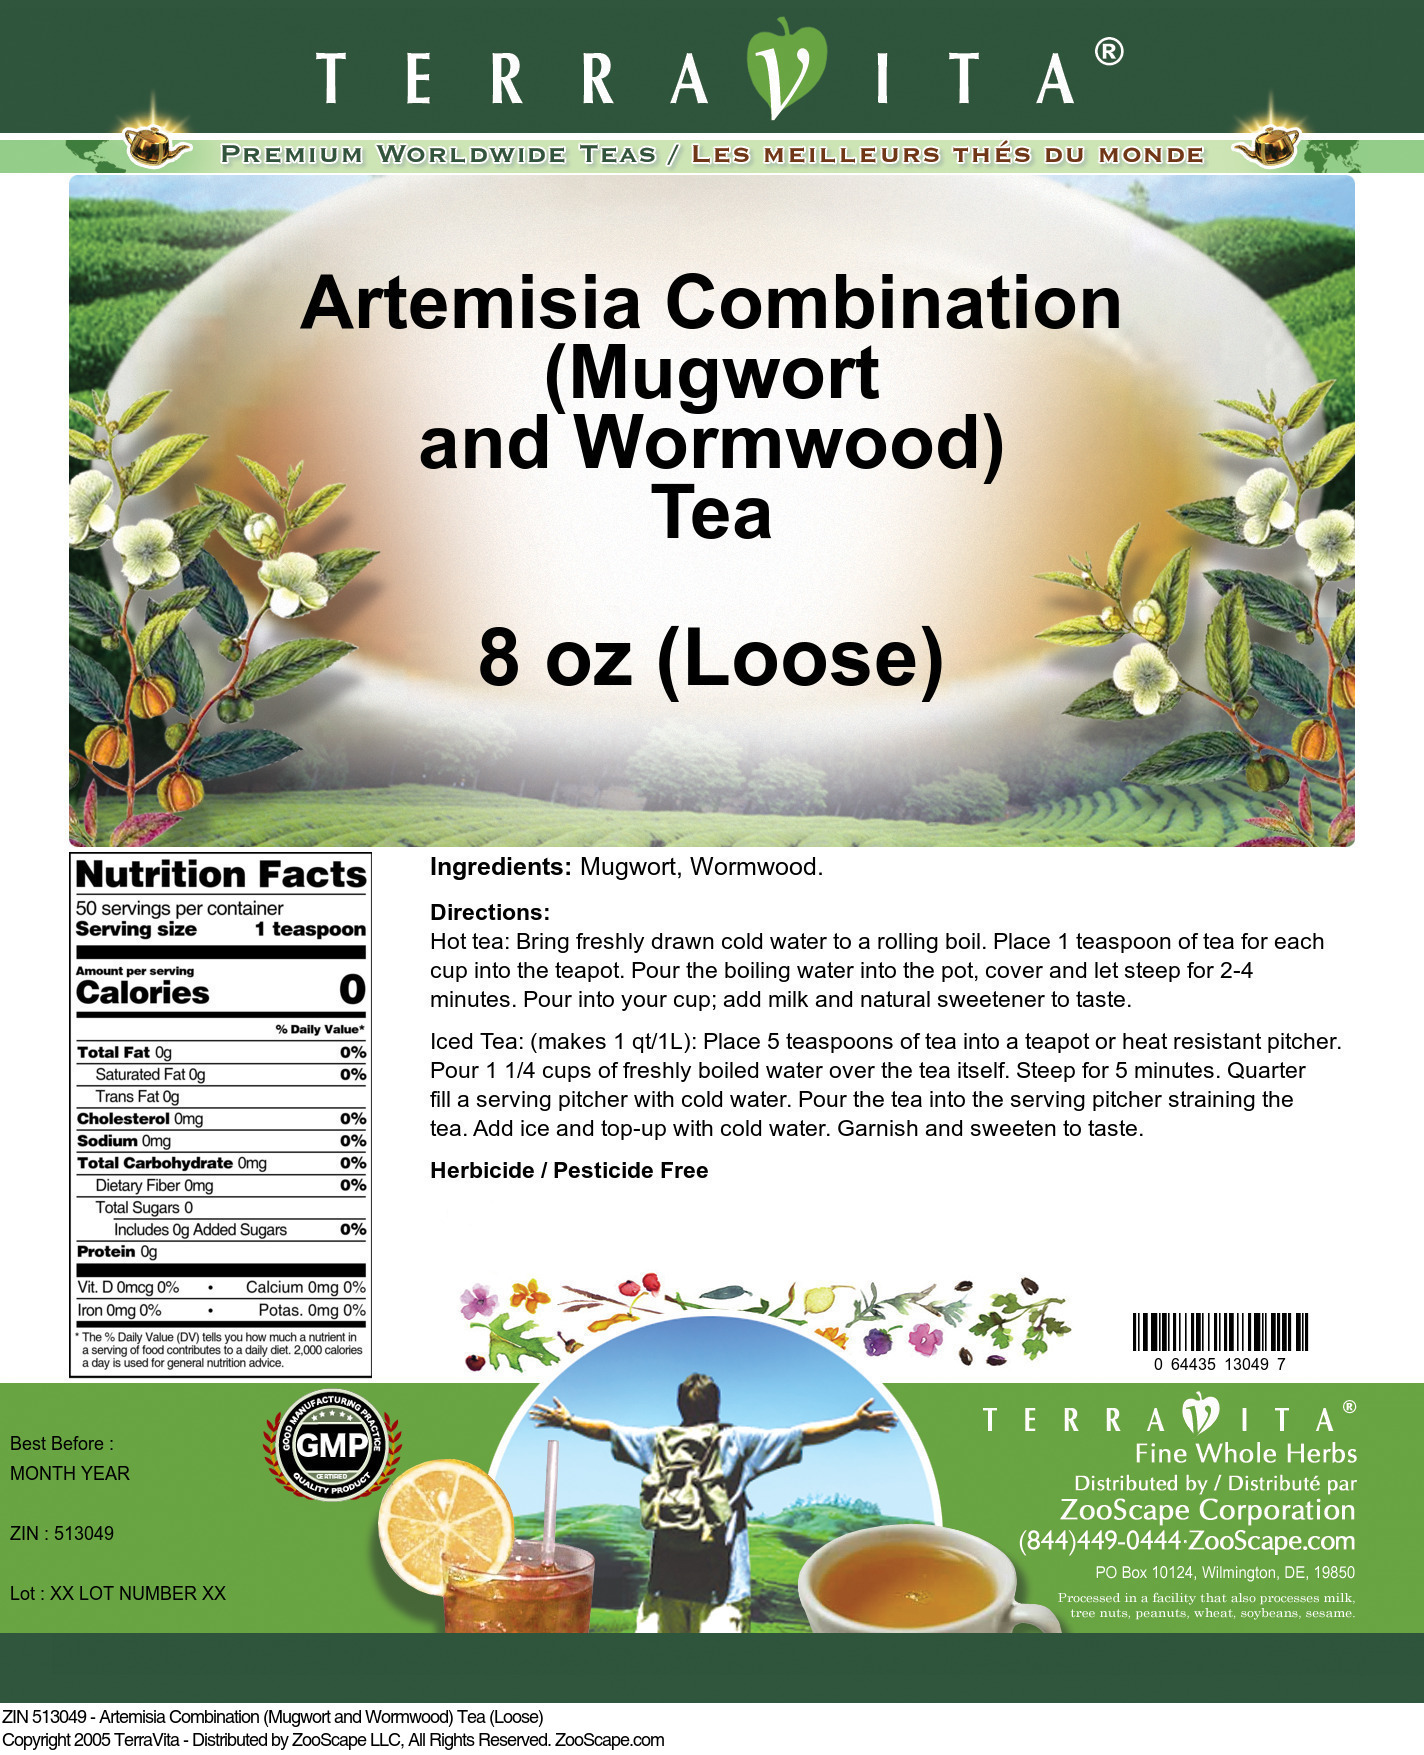 Artemisia Combination (Mugwort and Wormwood) Tea (Loose) - Label